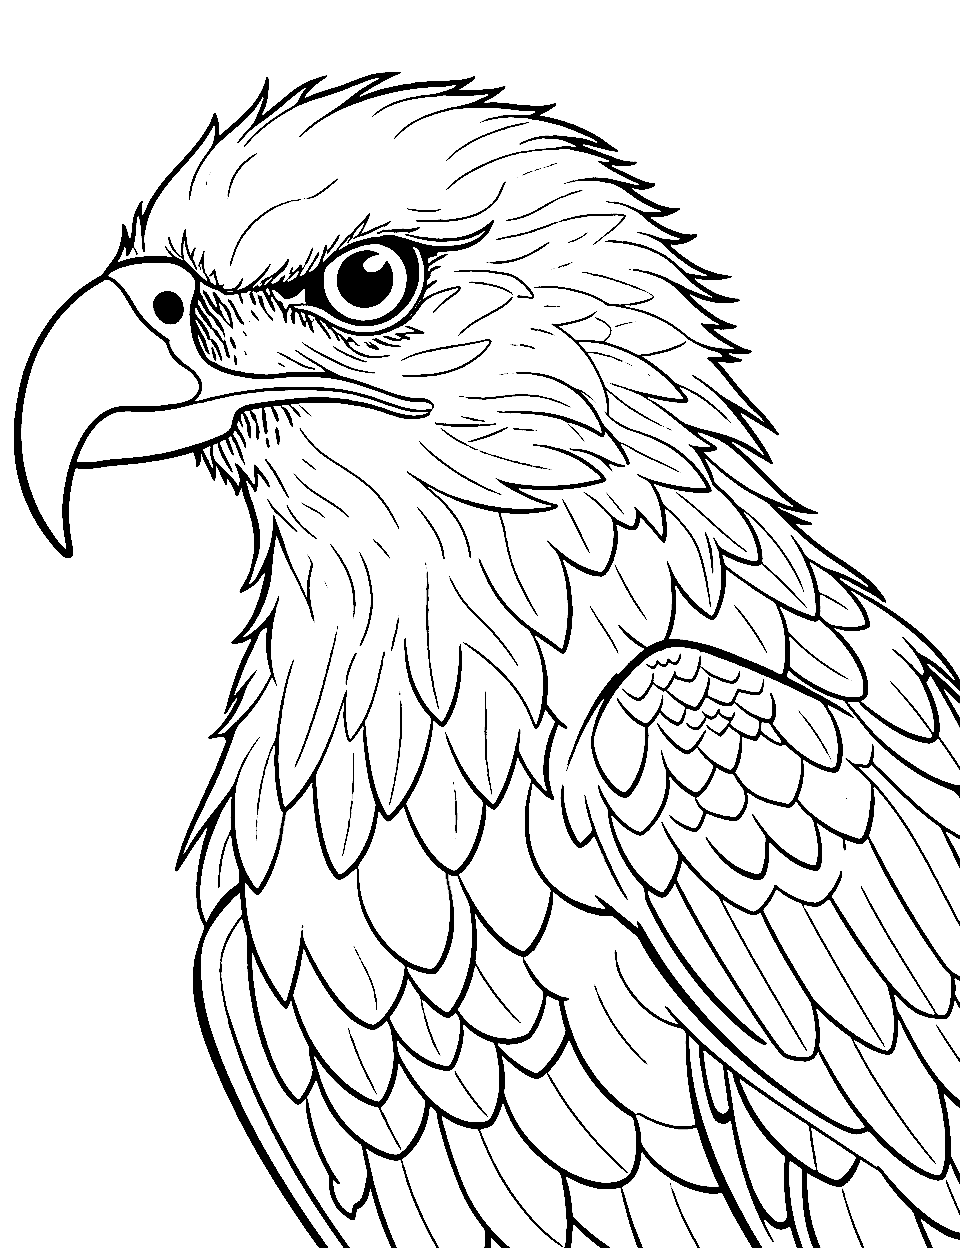 Advanced Eagle Portrait Coloring Page - Detailed close-up of an eagle’s fierce gaze.